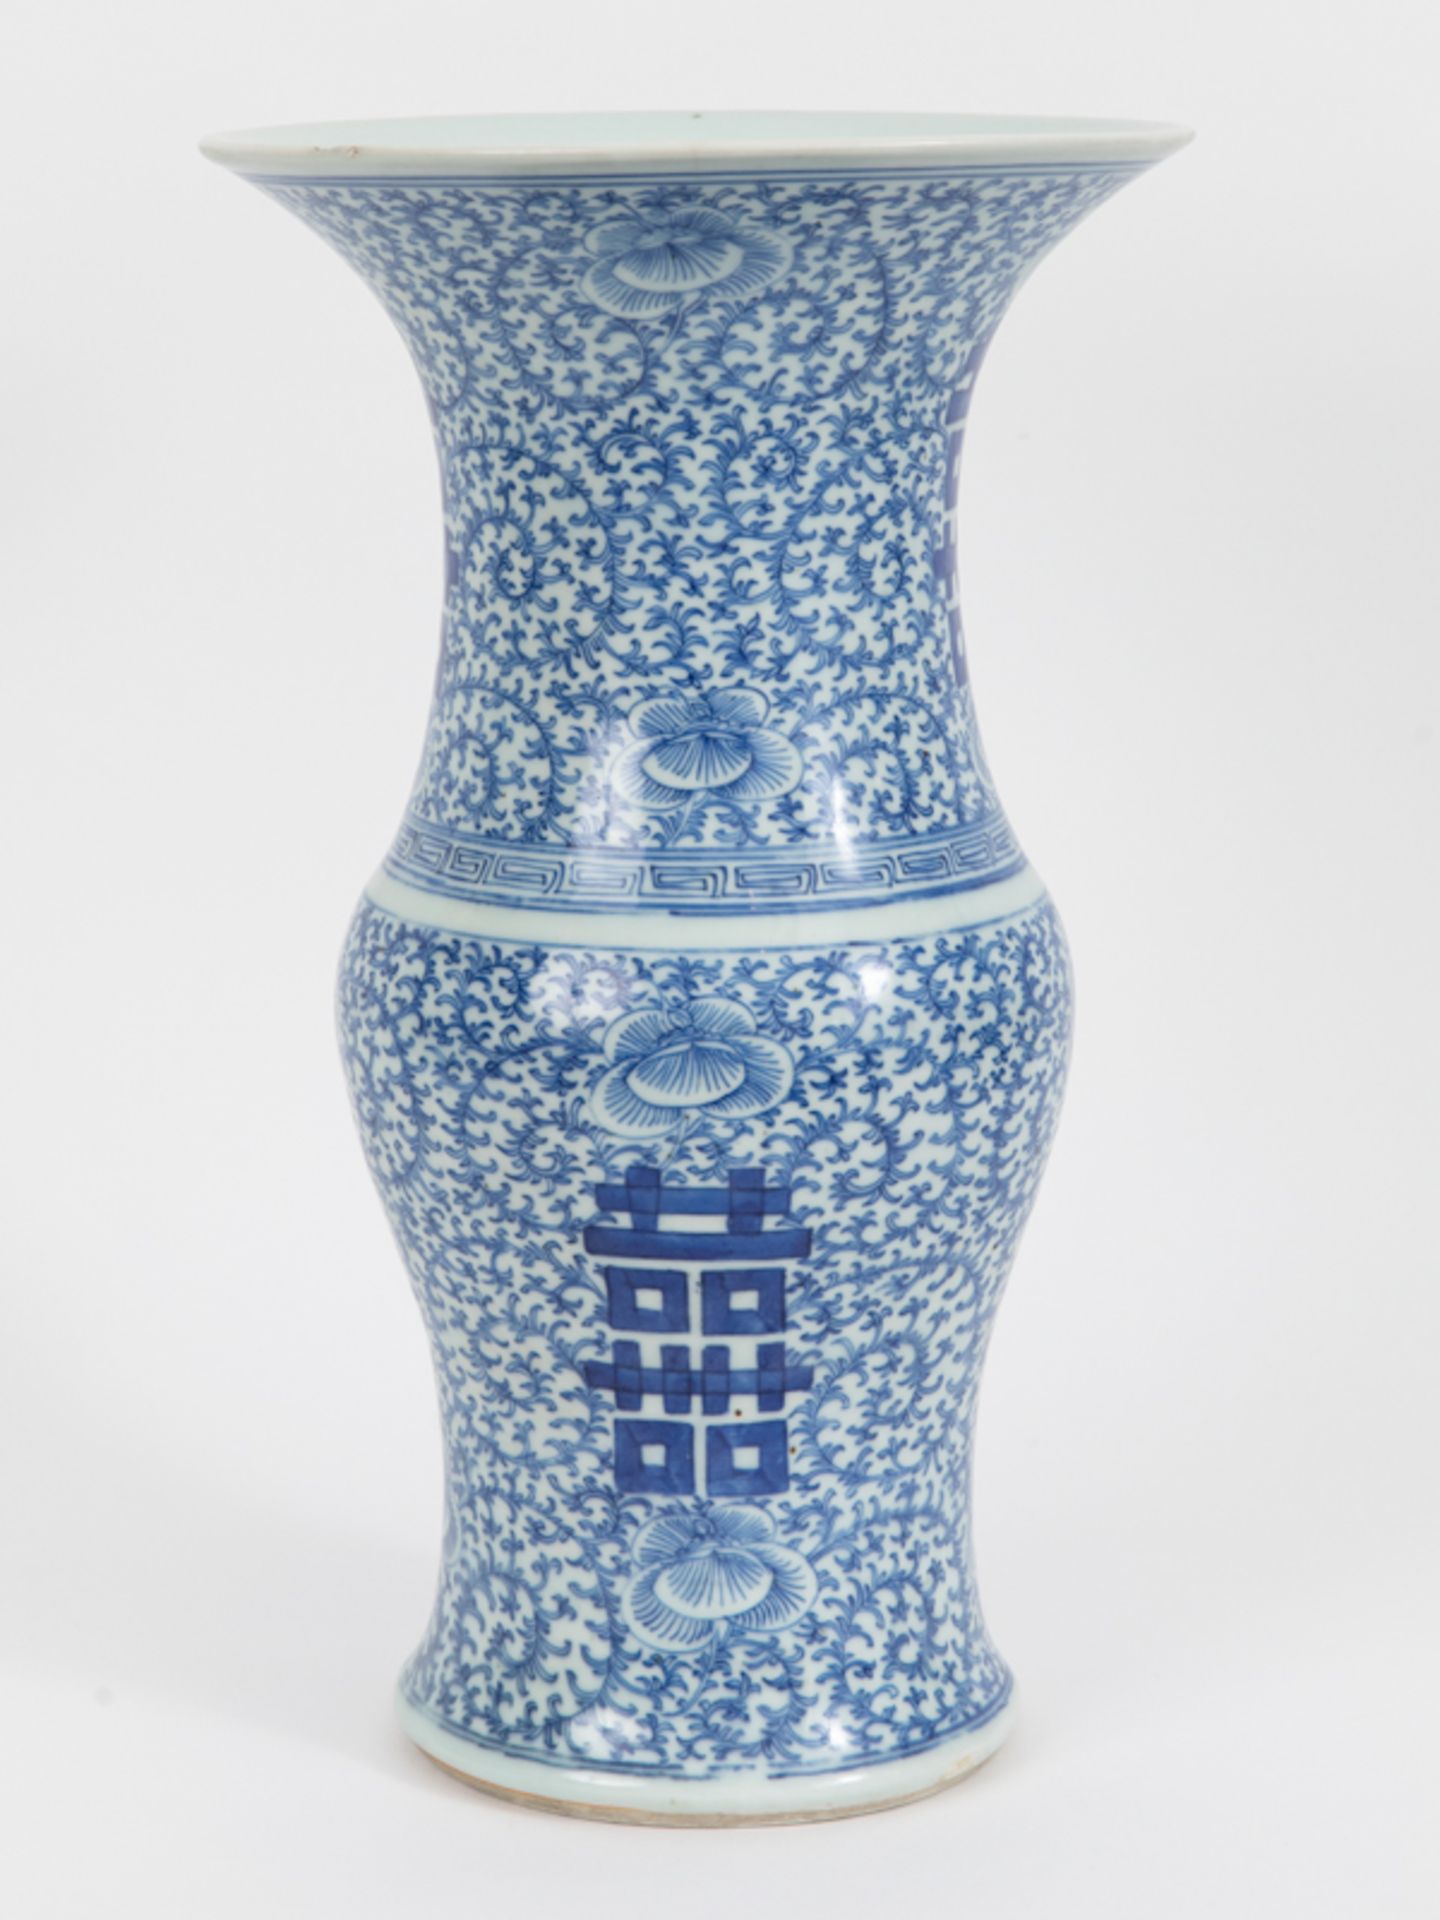 Balustervase mit GlÃ¼ckssymbolik, China, Qing-Dynastie, 18./19. Jh. brPorzellan mit unter Glasur - Image 5 of 5